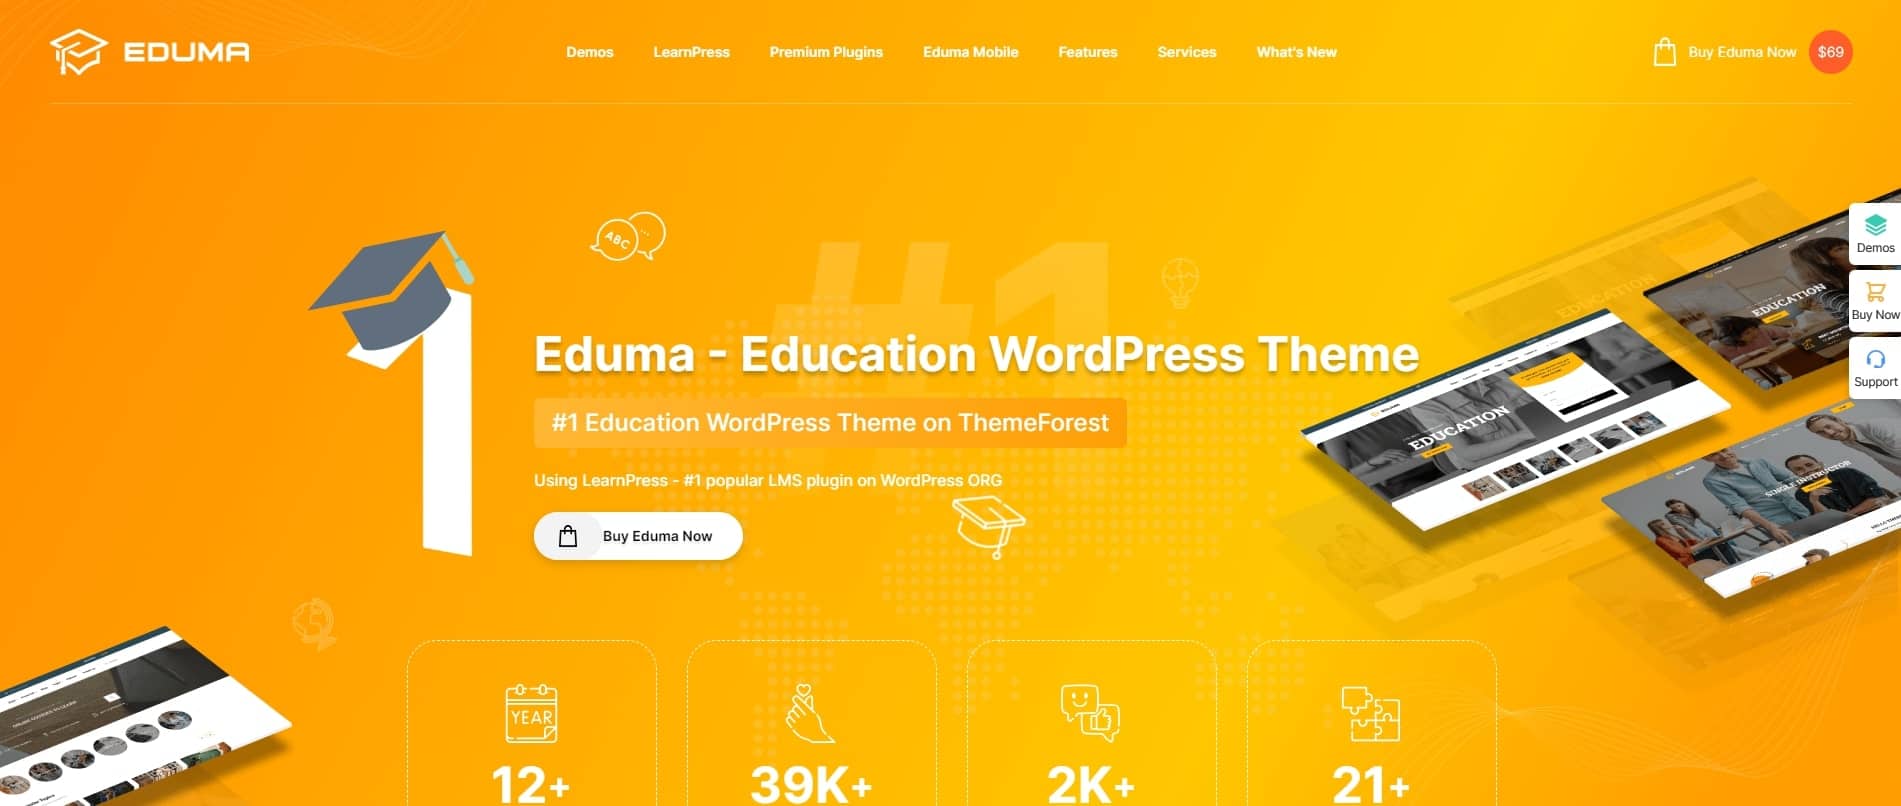 Eduma education wordpress theme